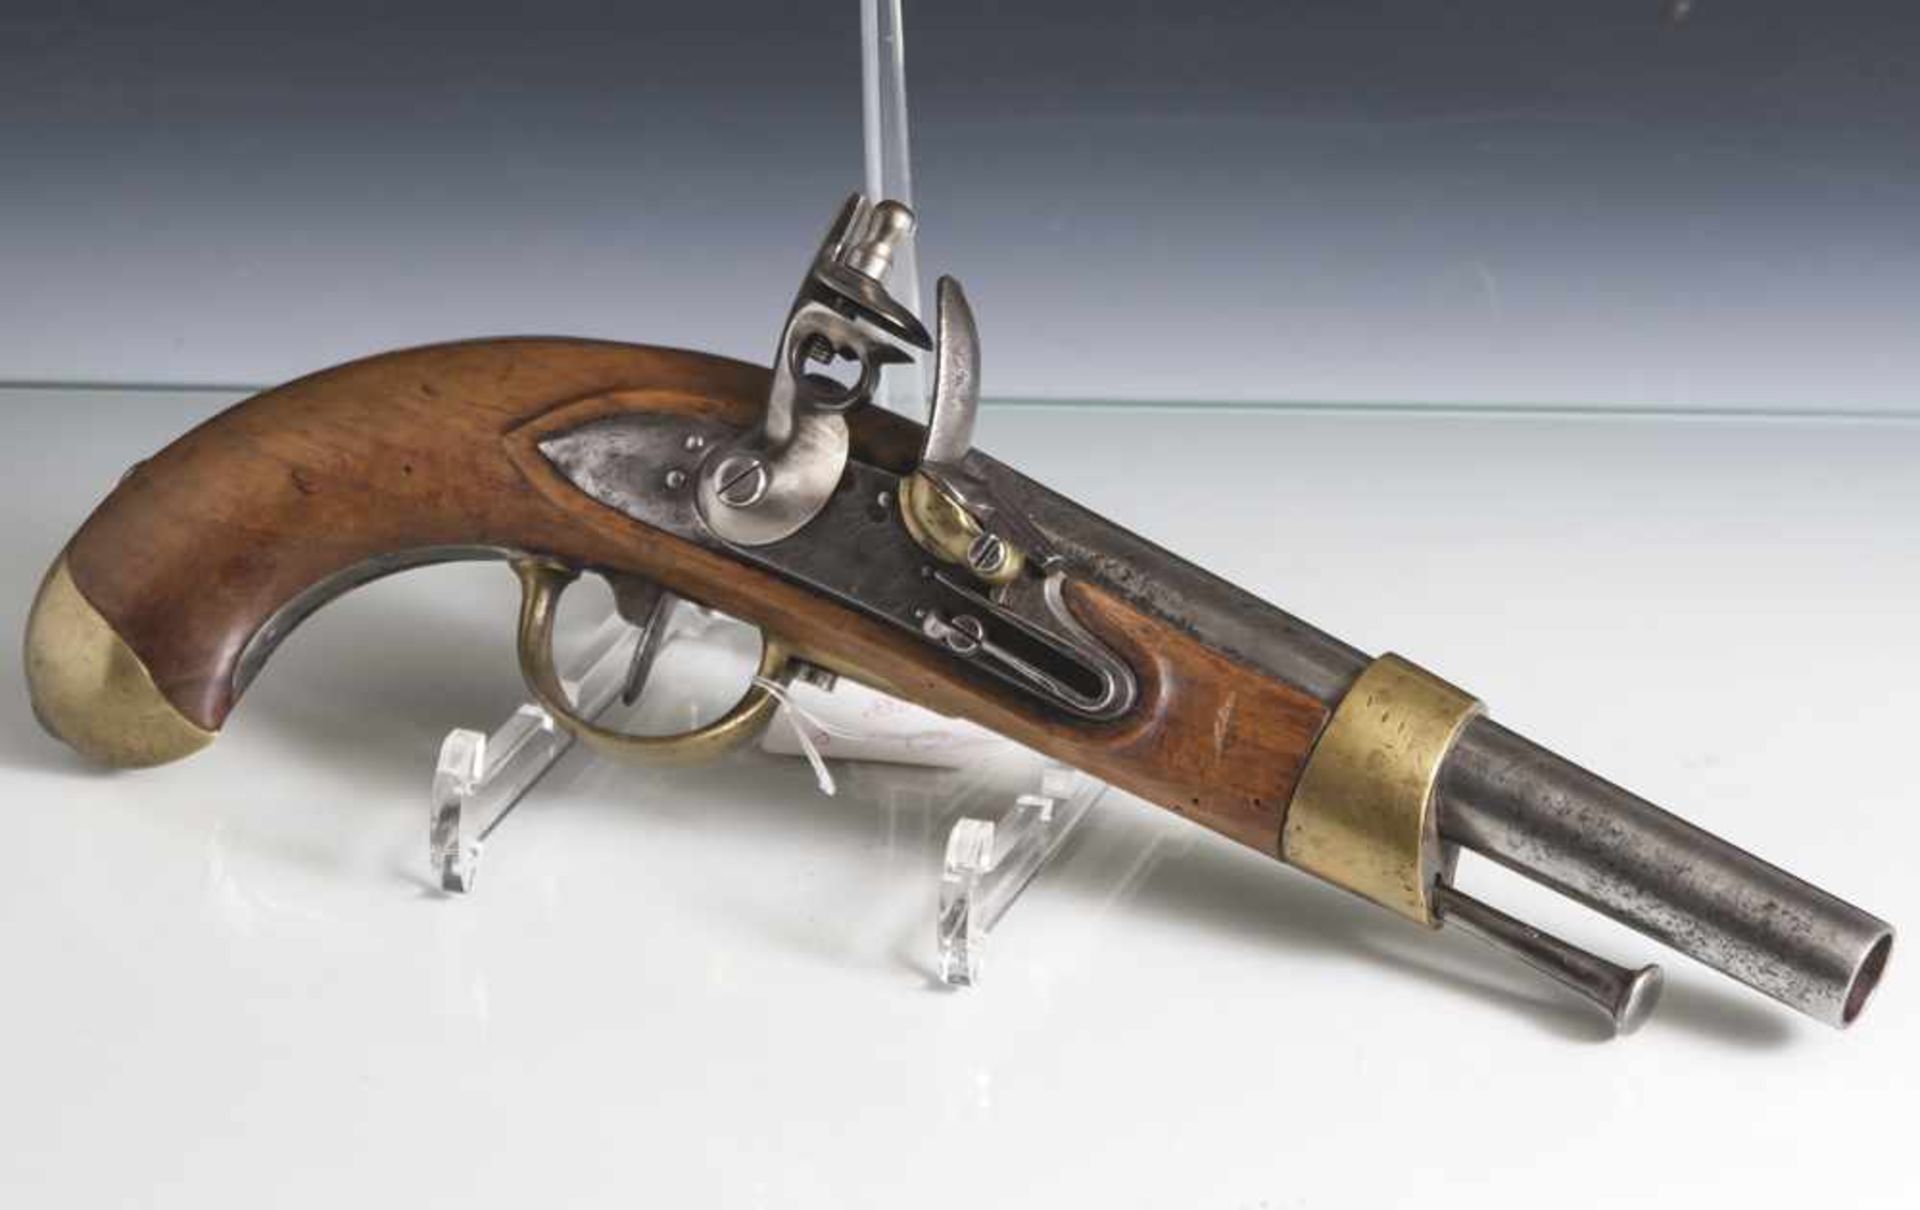 Franz. Perkussionspistole, Modell M An 13 (1812), Manufaktur Maubeuge, Truppengestempelt, in sehr